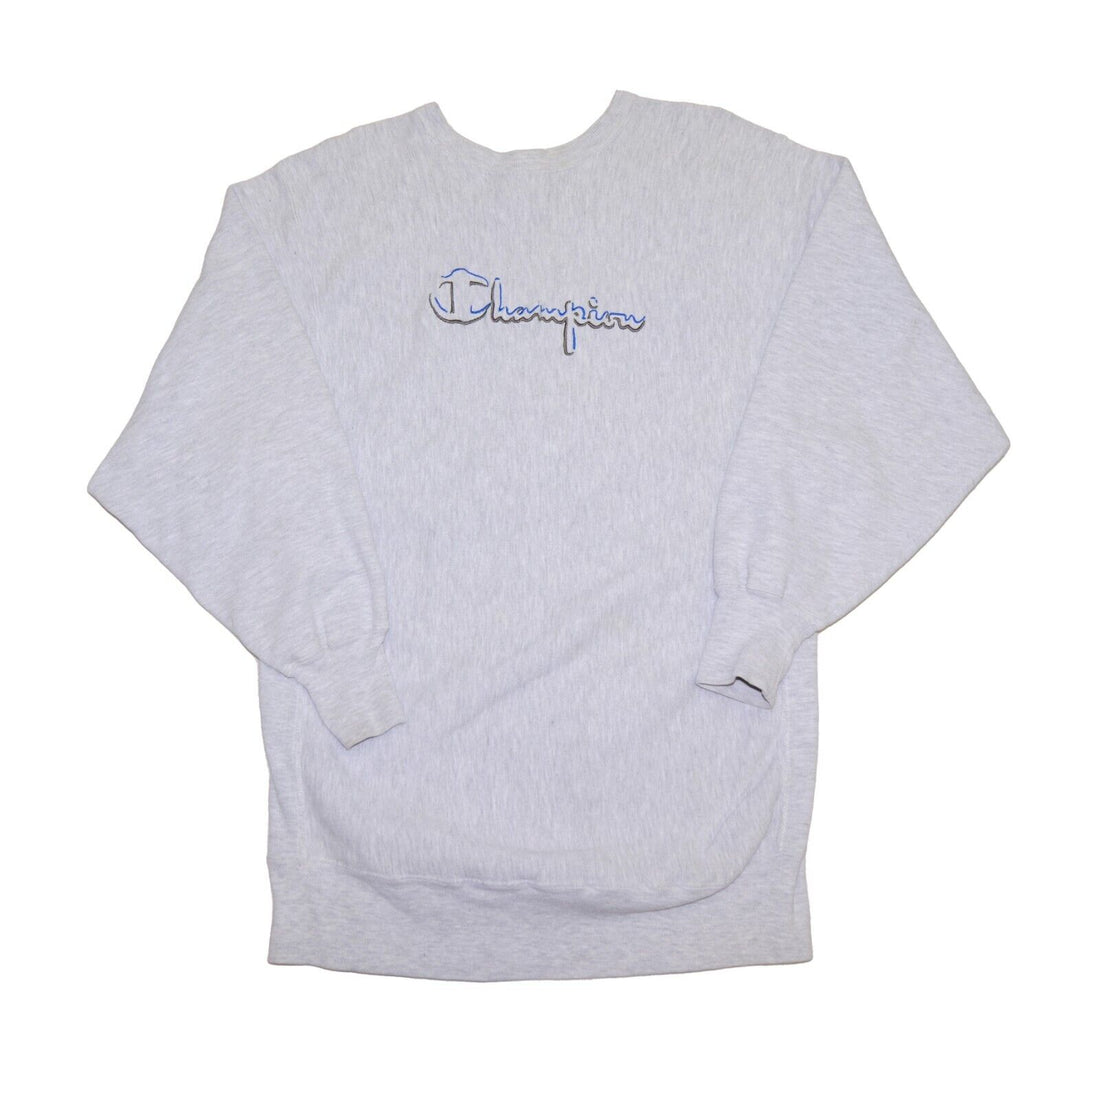 Vintage Champion Reverse Weave Sweatshirt Crewneck Size 3XL Gray 90s Spell Out